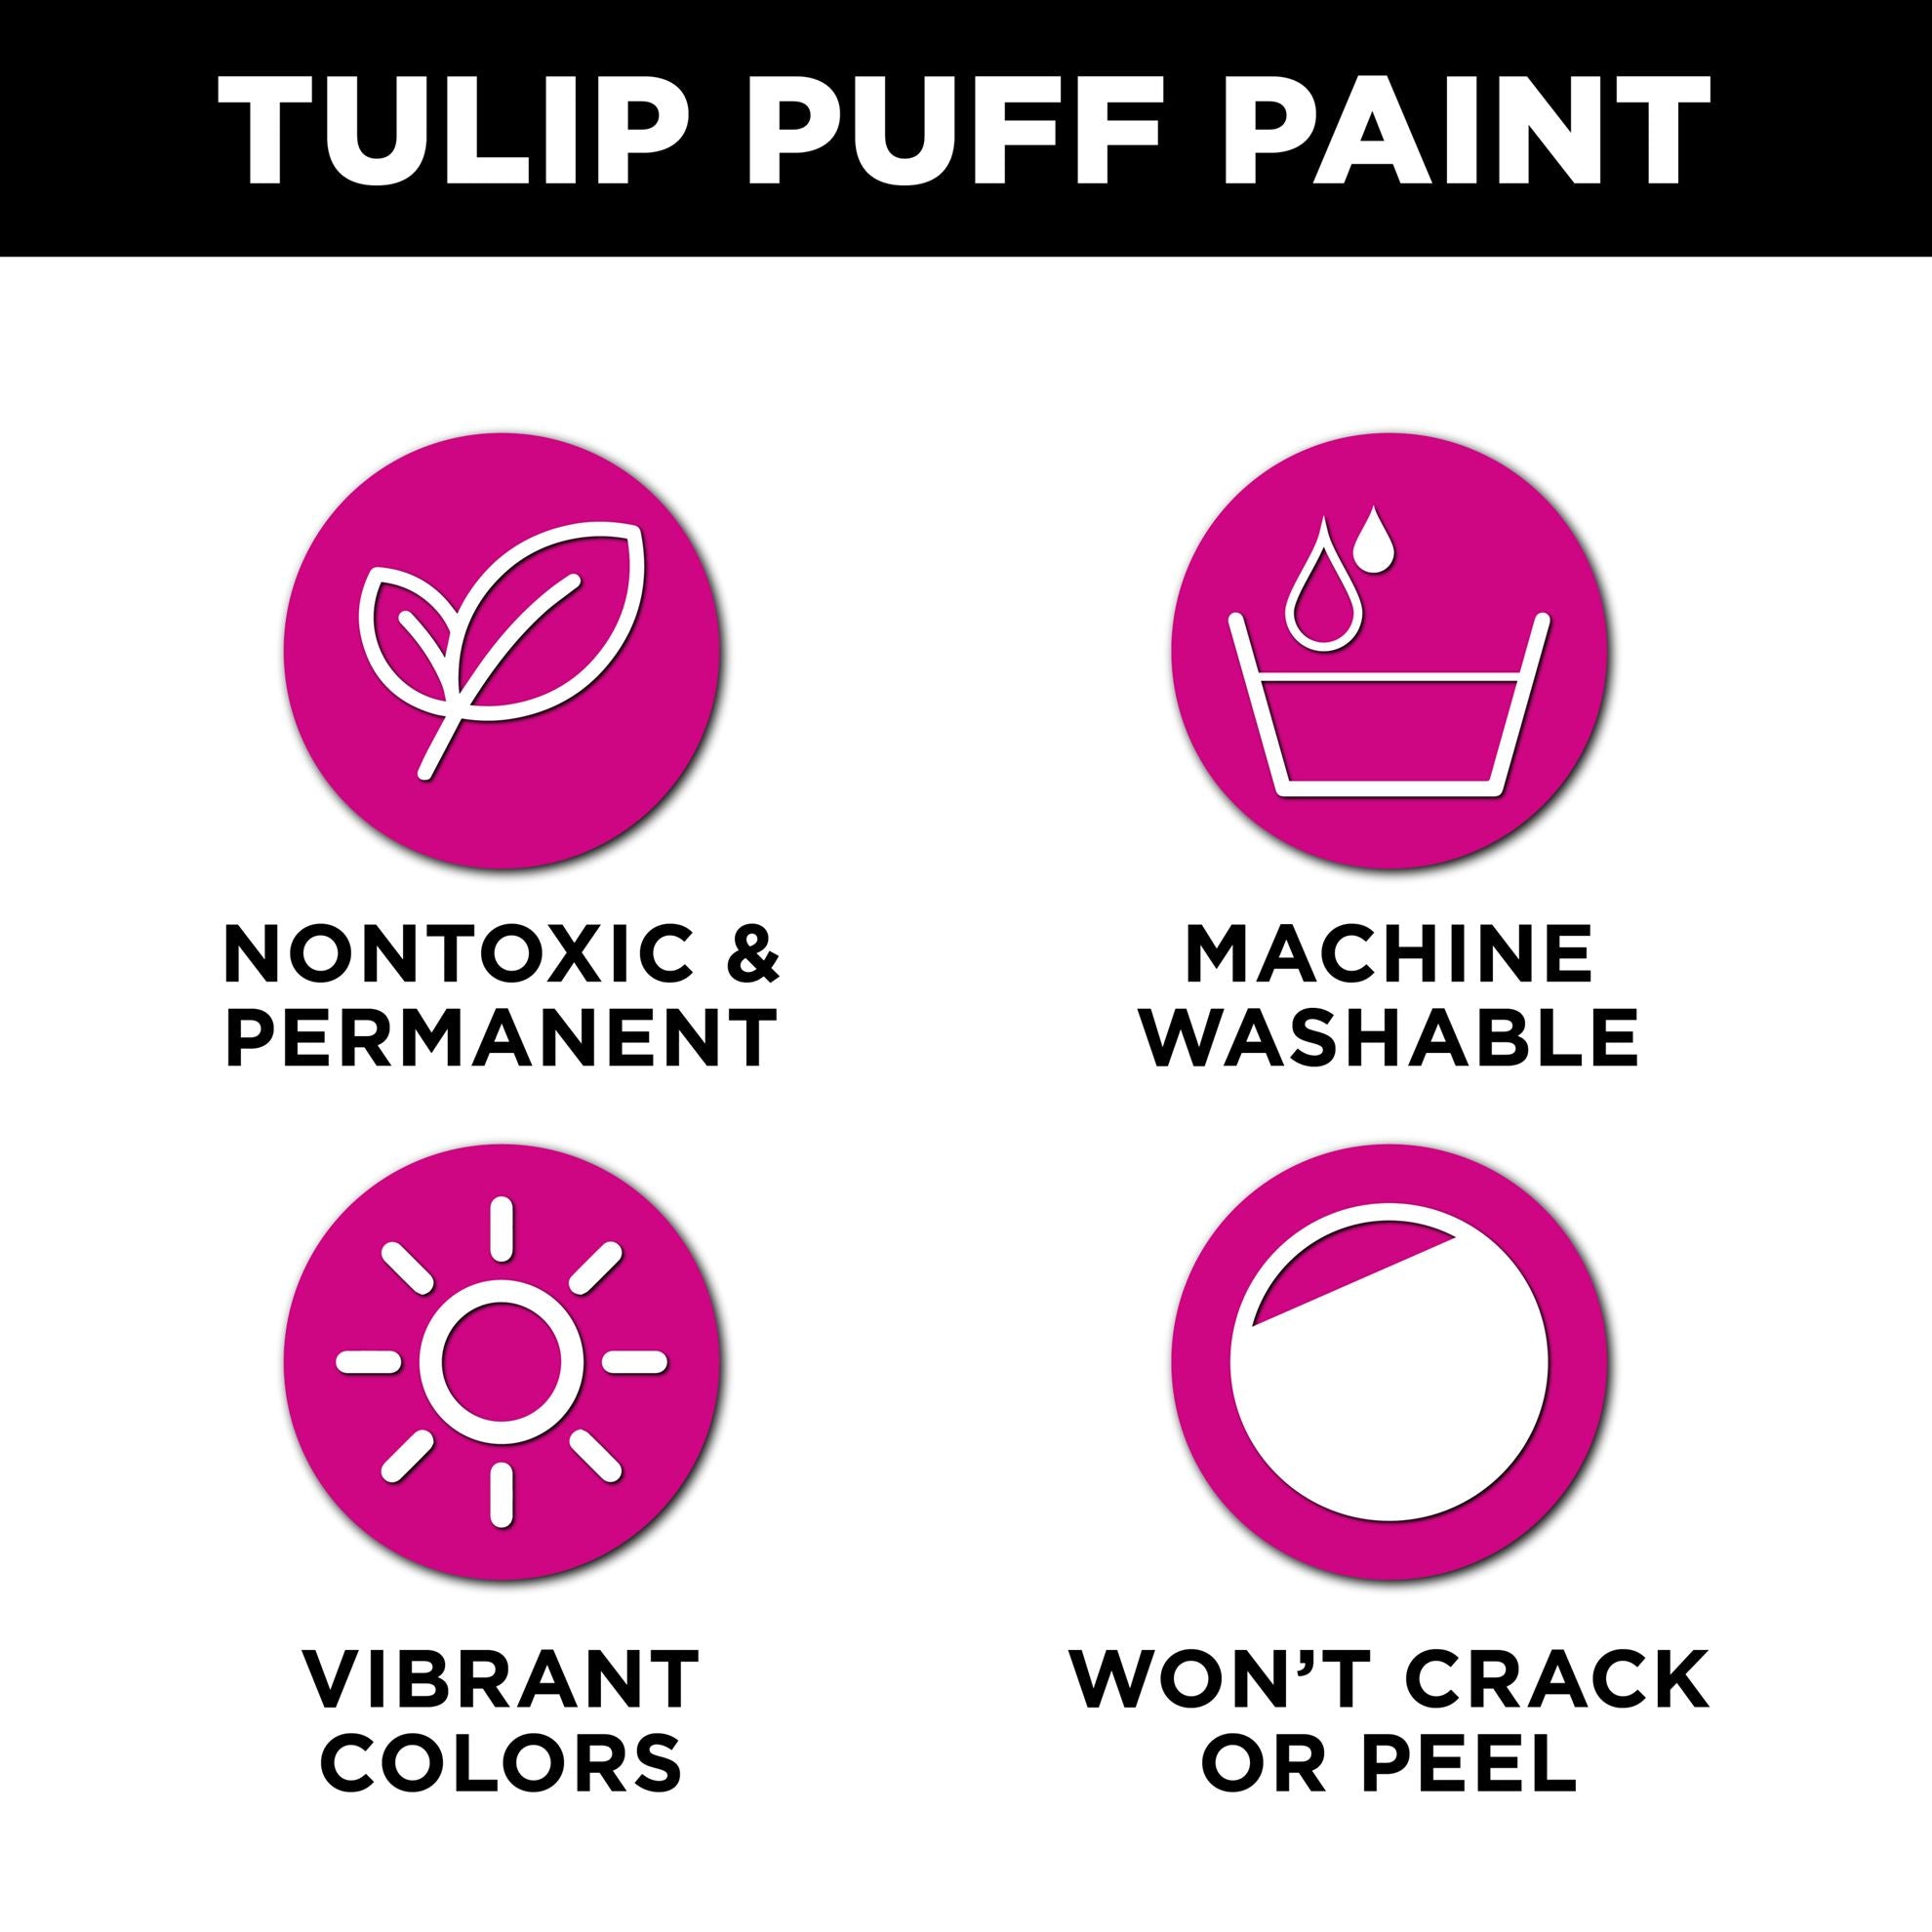 Tulip Puff Paint Shiny Yellow 4 fl. oz. - 3